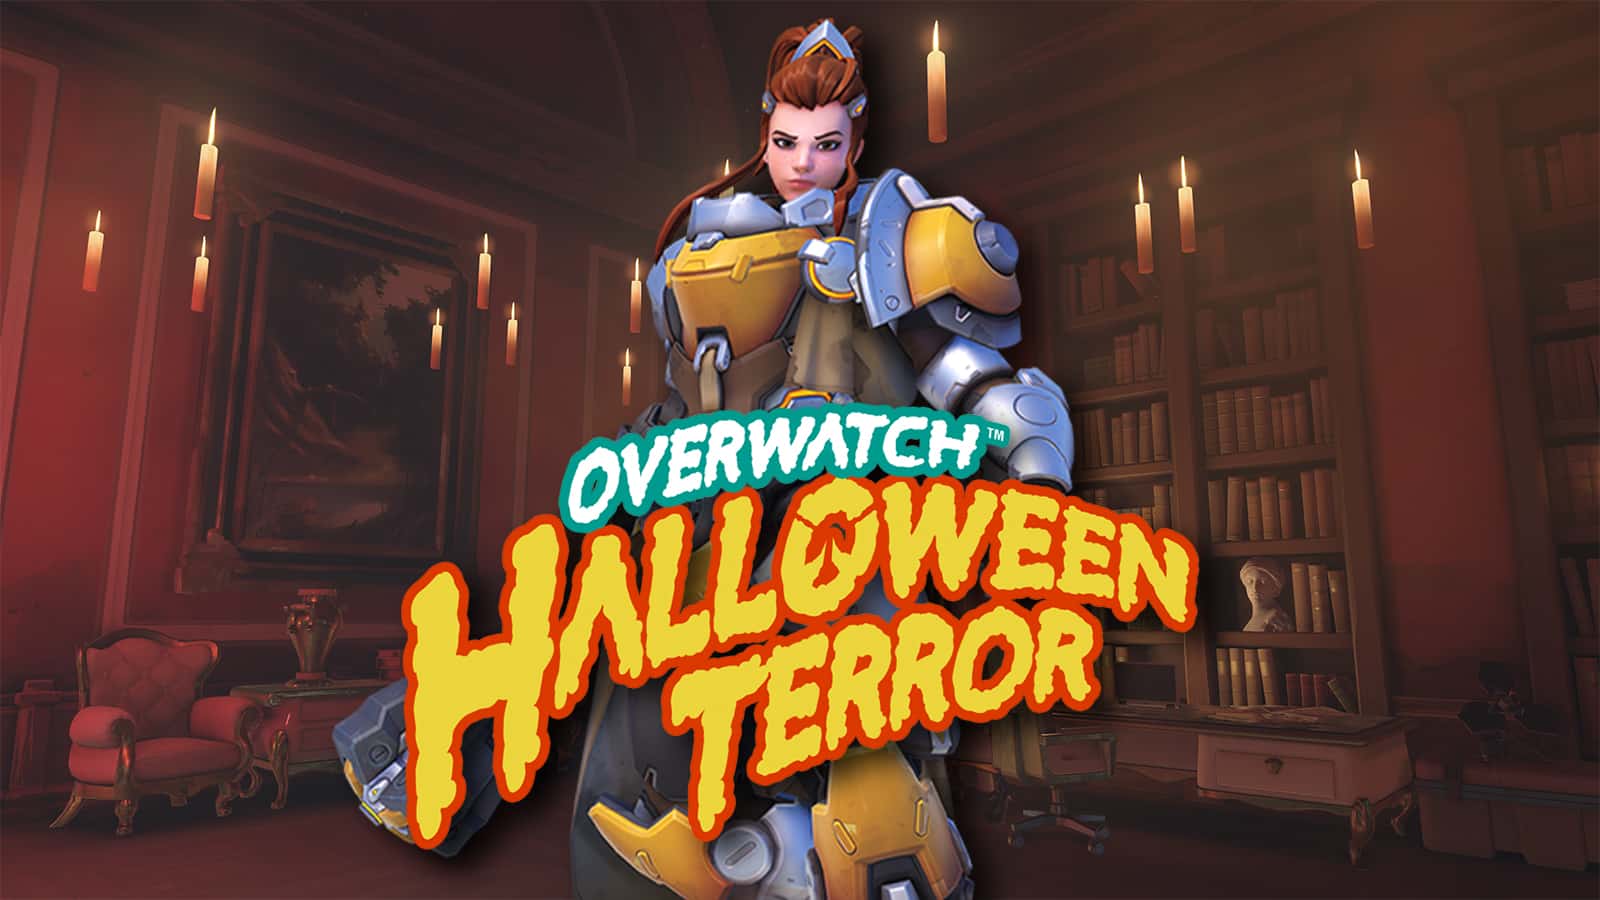 Overwatch Brigitte halloween terror skin